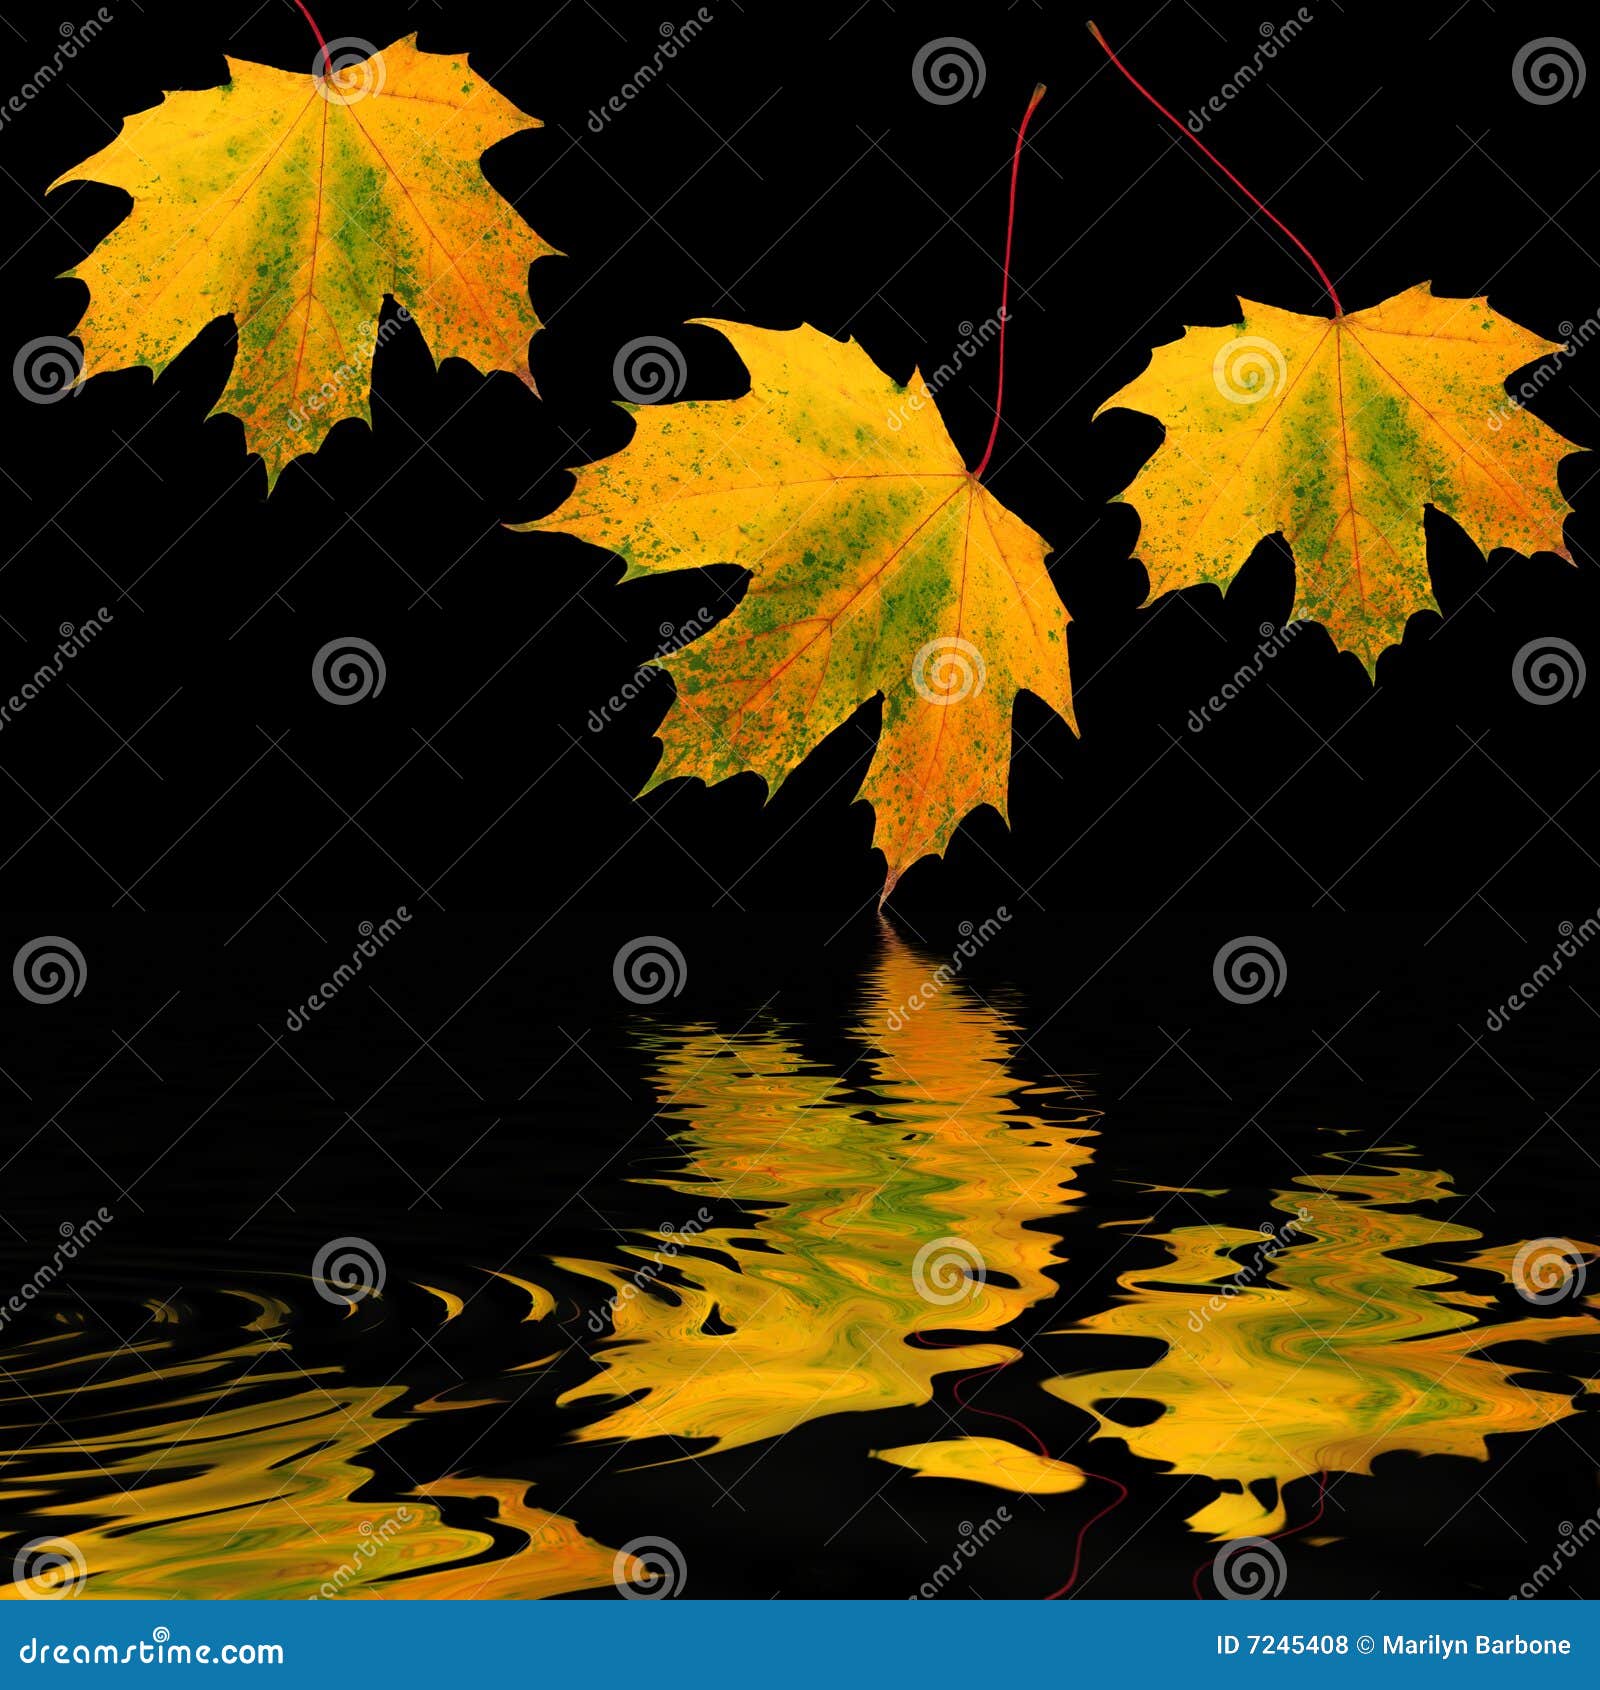 Golden Leaf Beauty stock photo. Image of background, reflection - 7245408